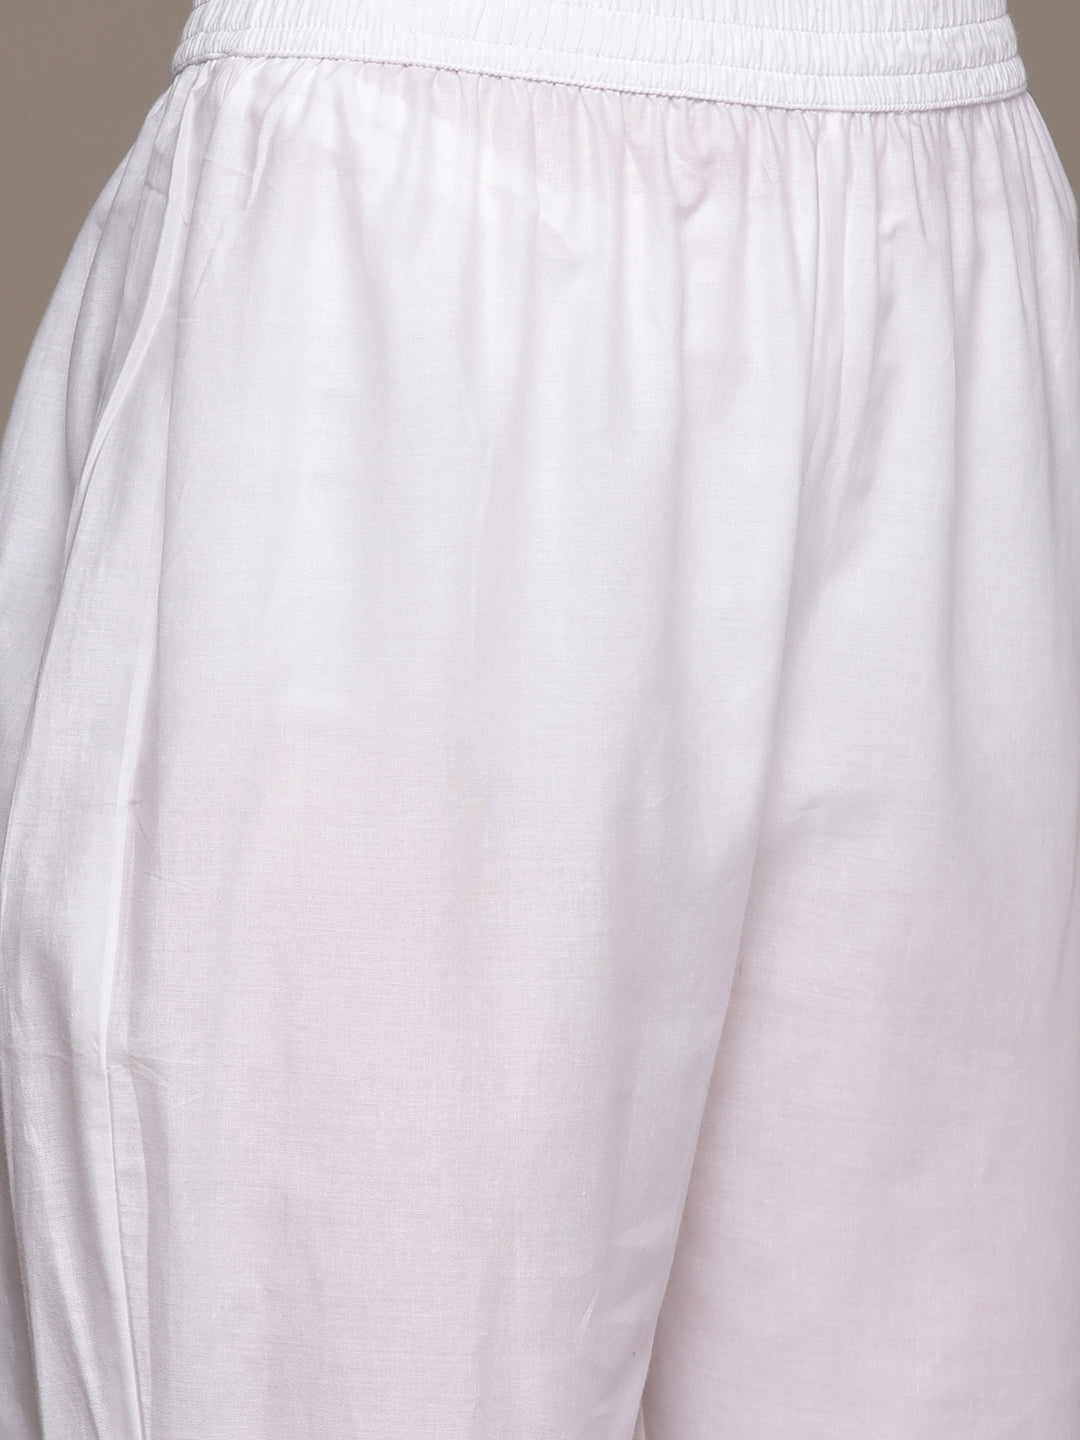 Ishin Women's Cotton Pink Embroidered A-Line Kurta with Trouser & Dupatta